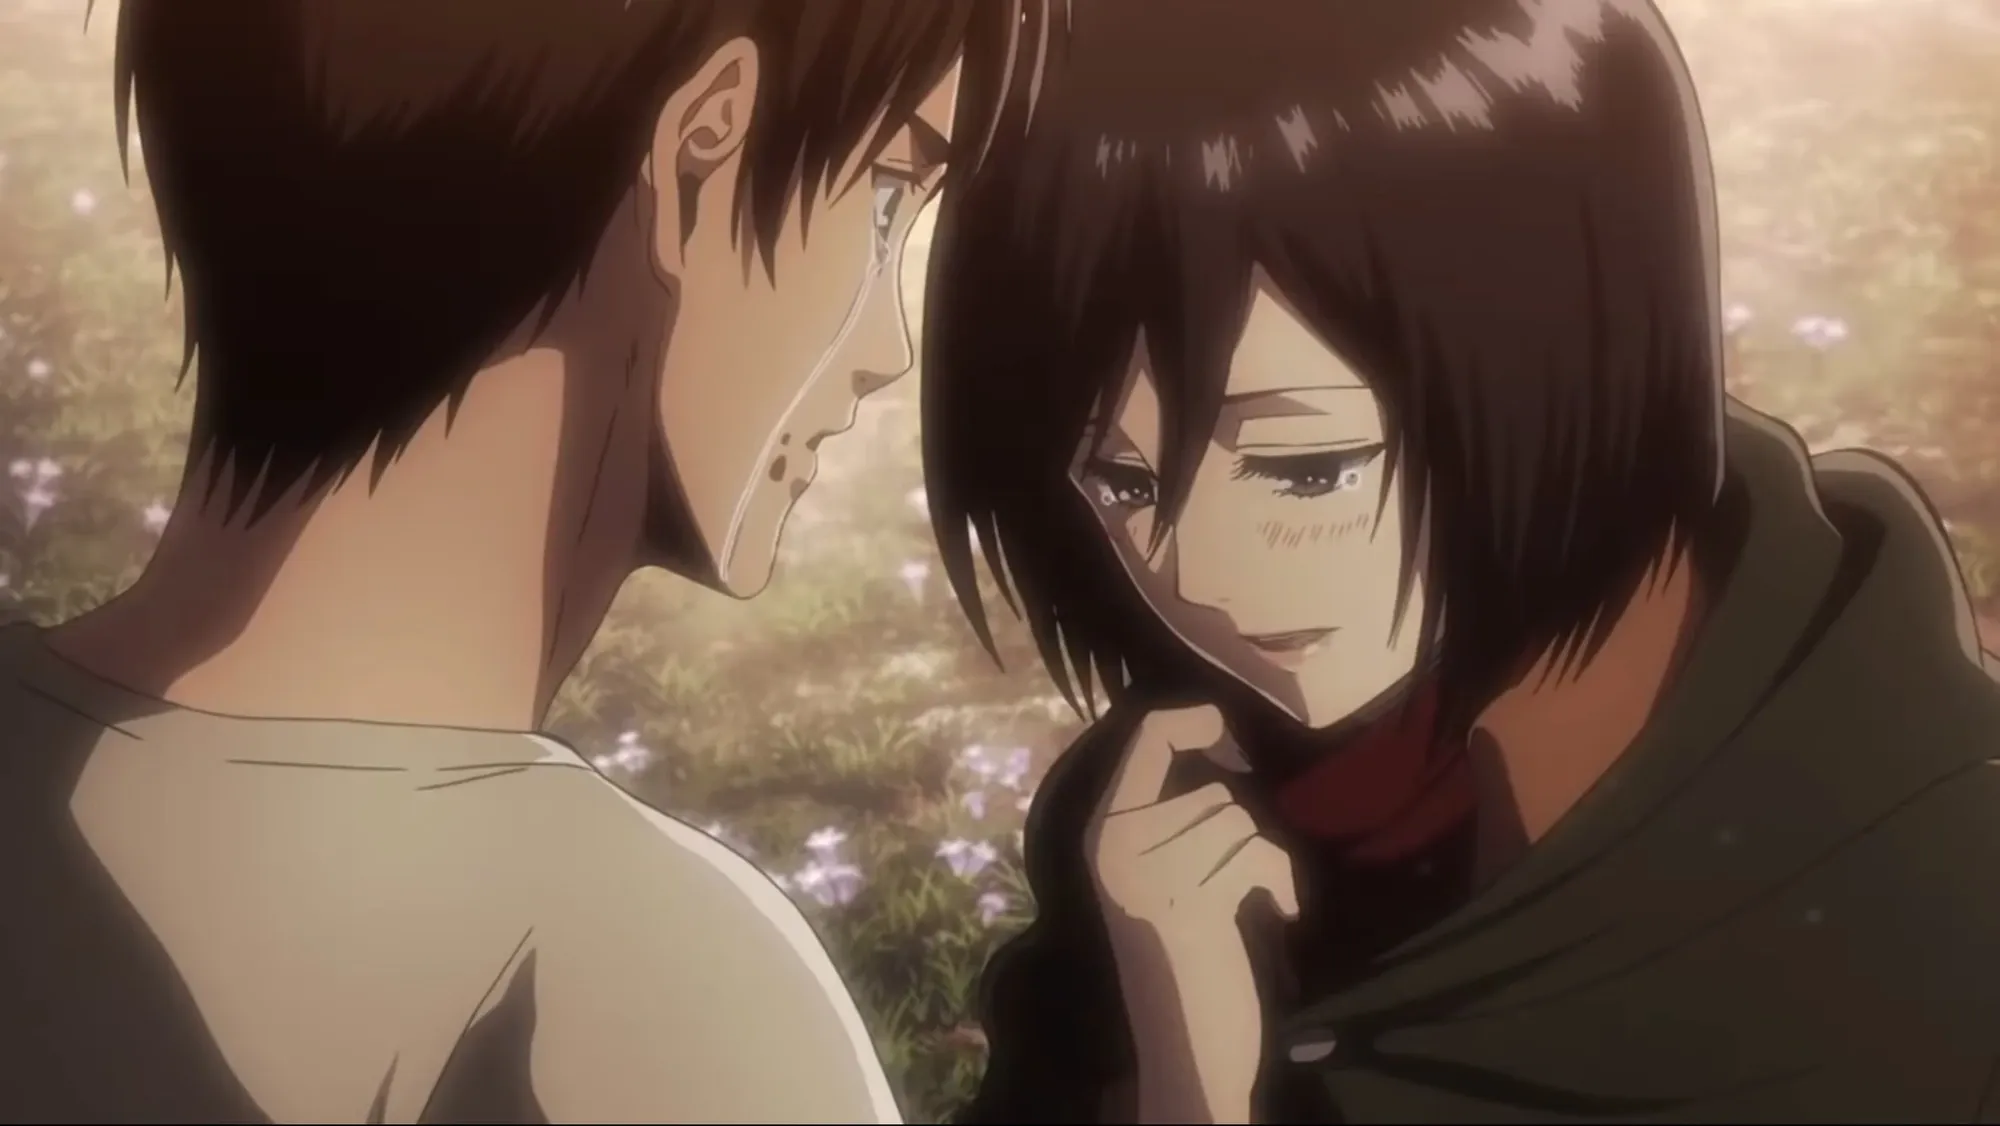 Ataque ao Titan: Qual é o problema com o relacionamento de Eren & Mikasa?